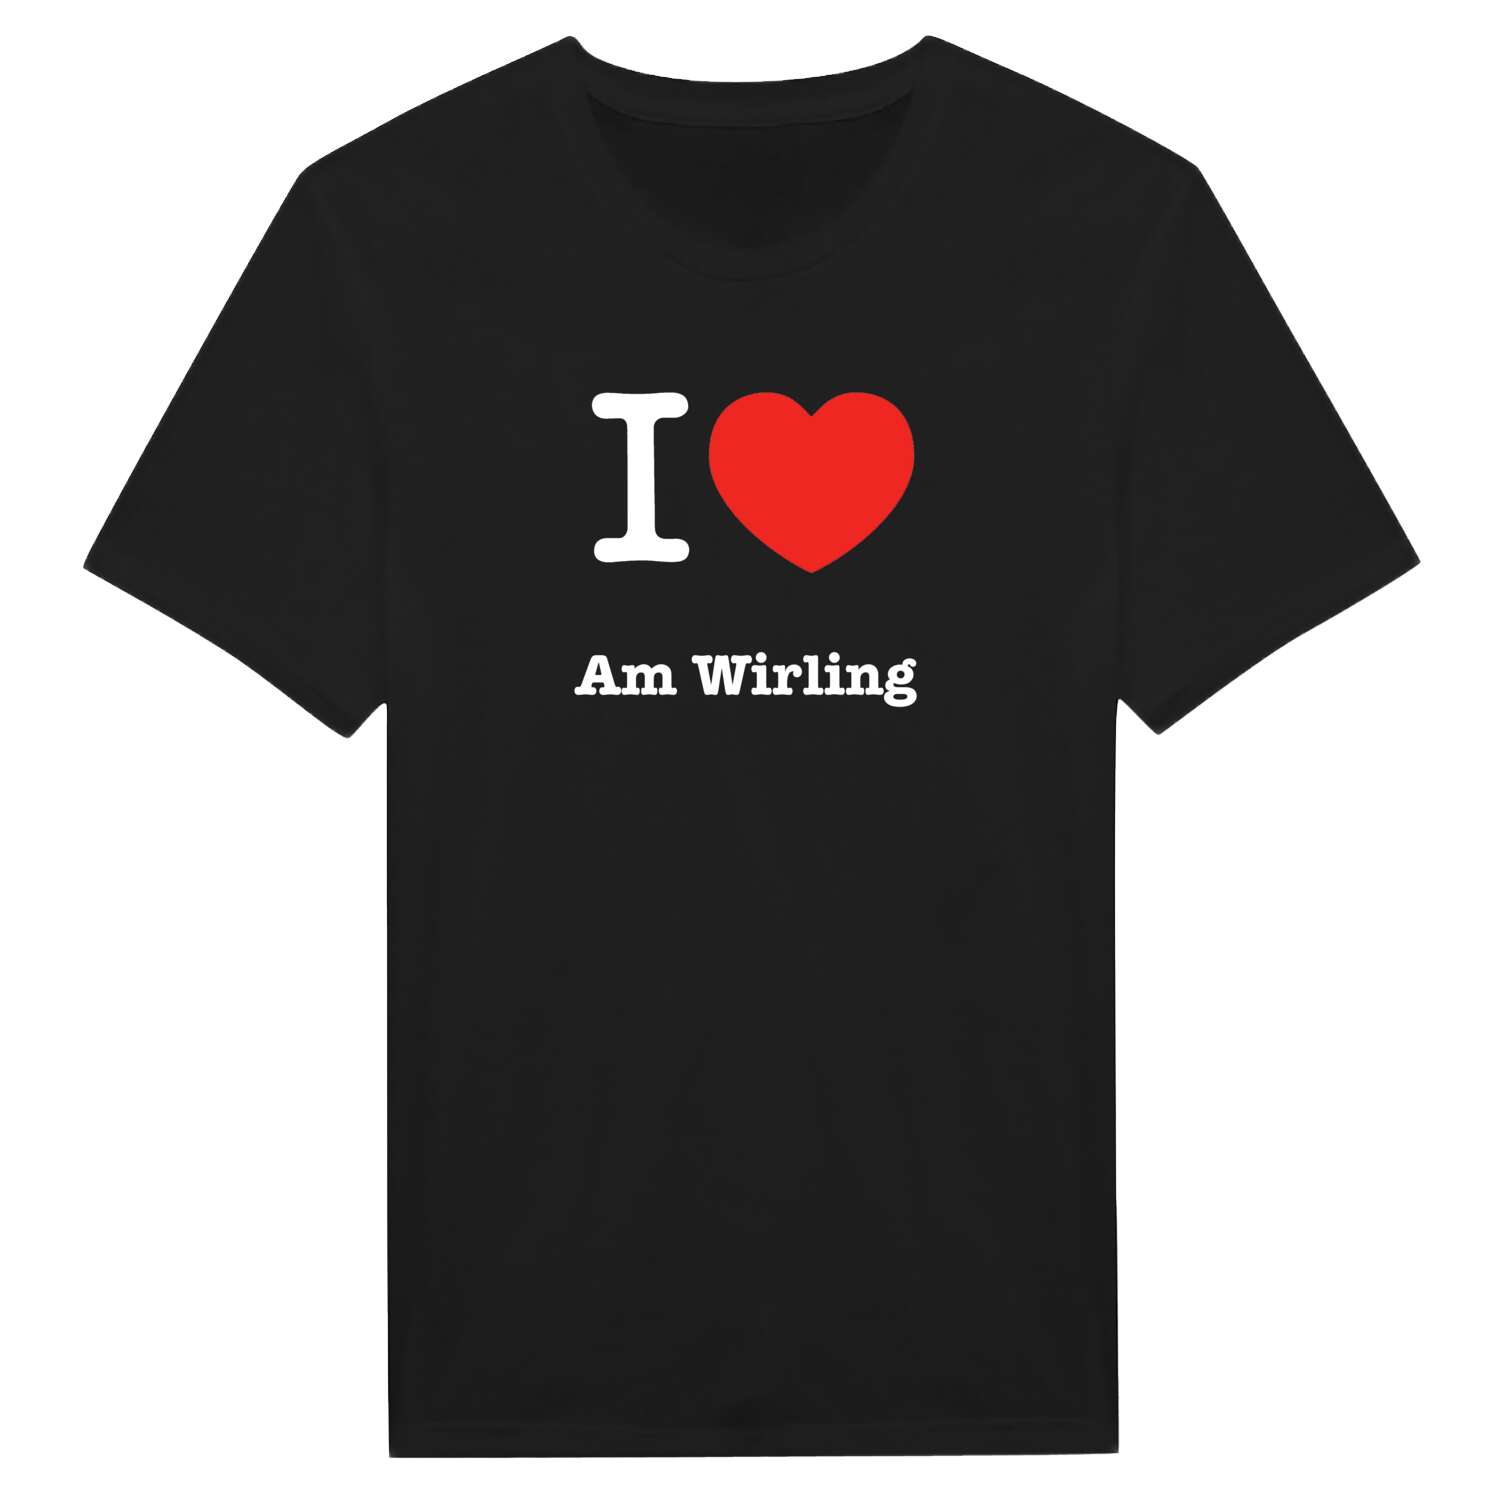 Am Wirling T-Shirt »I love«